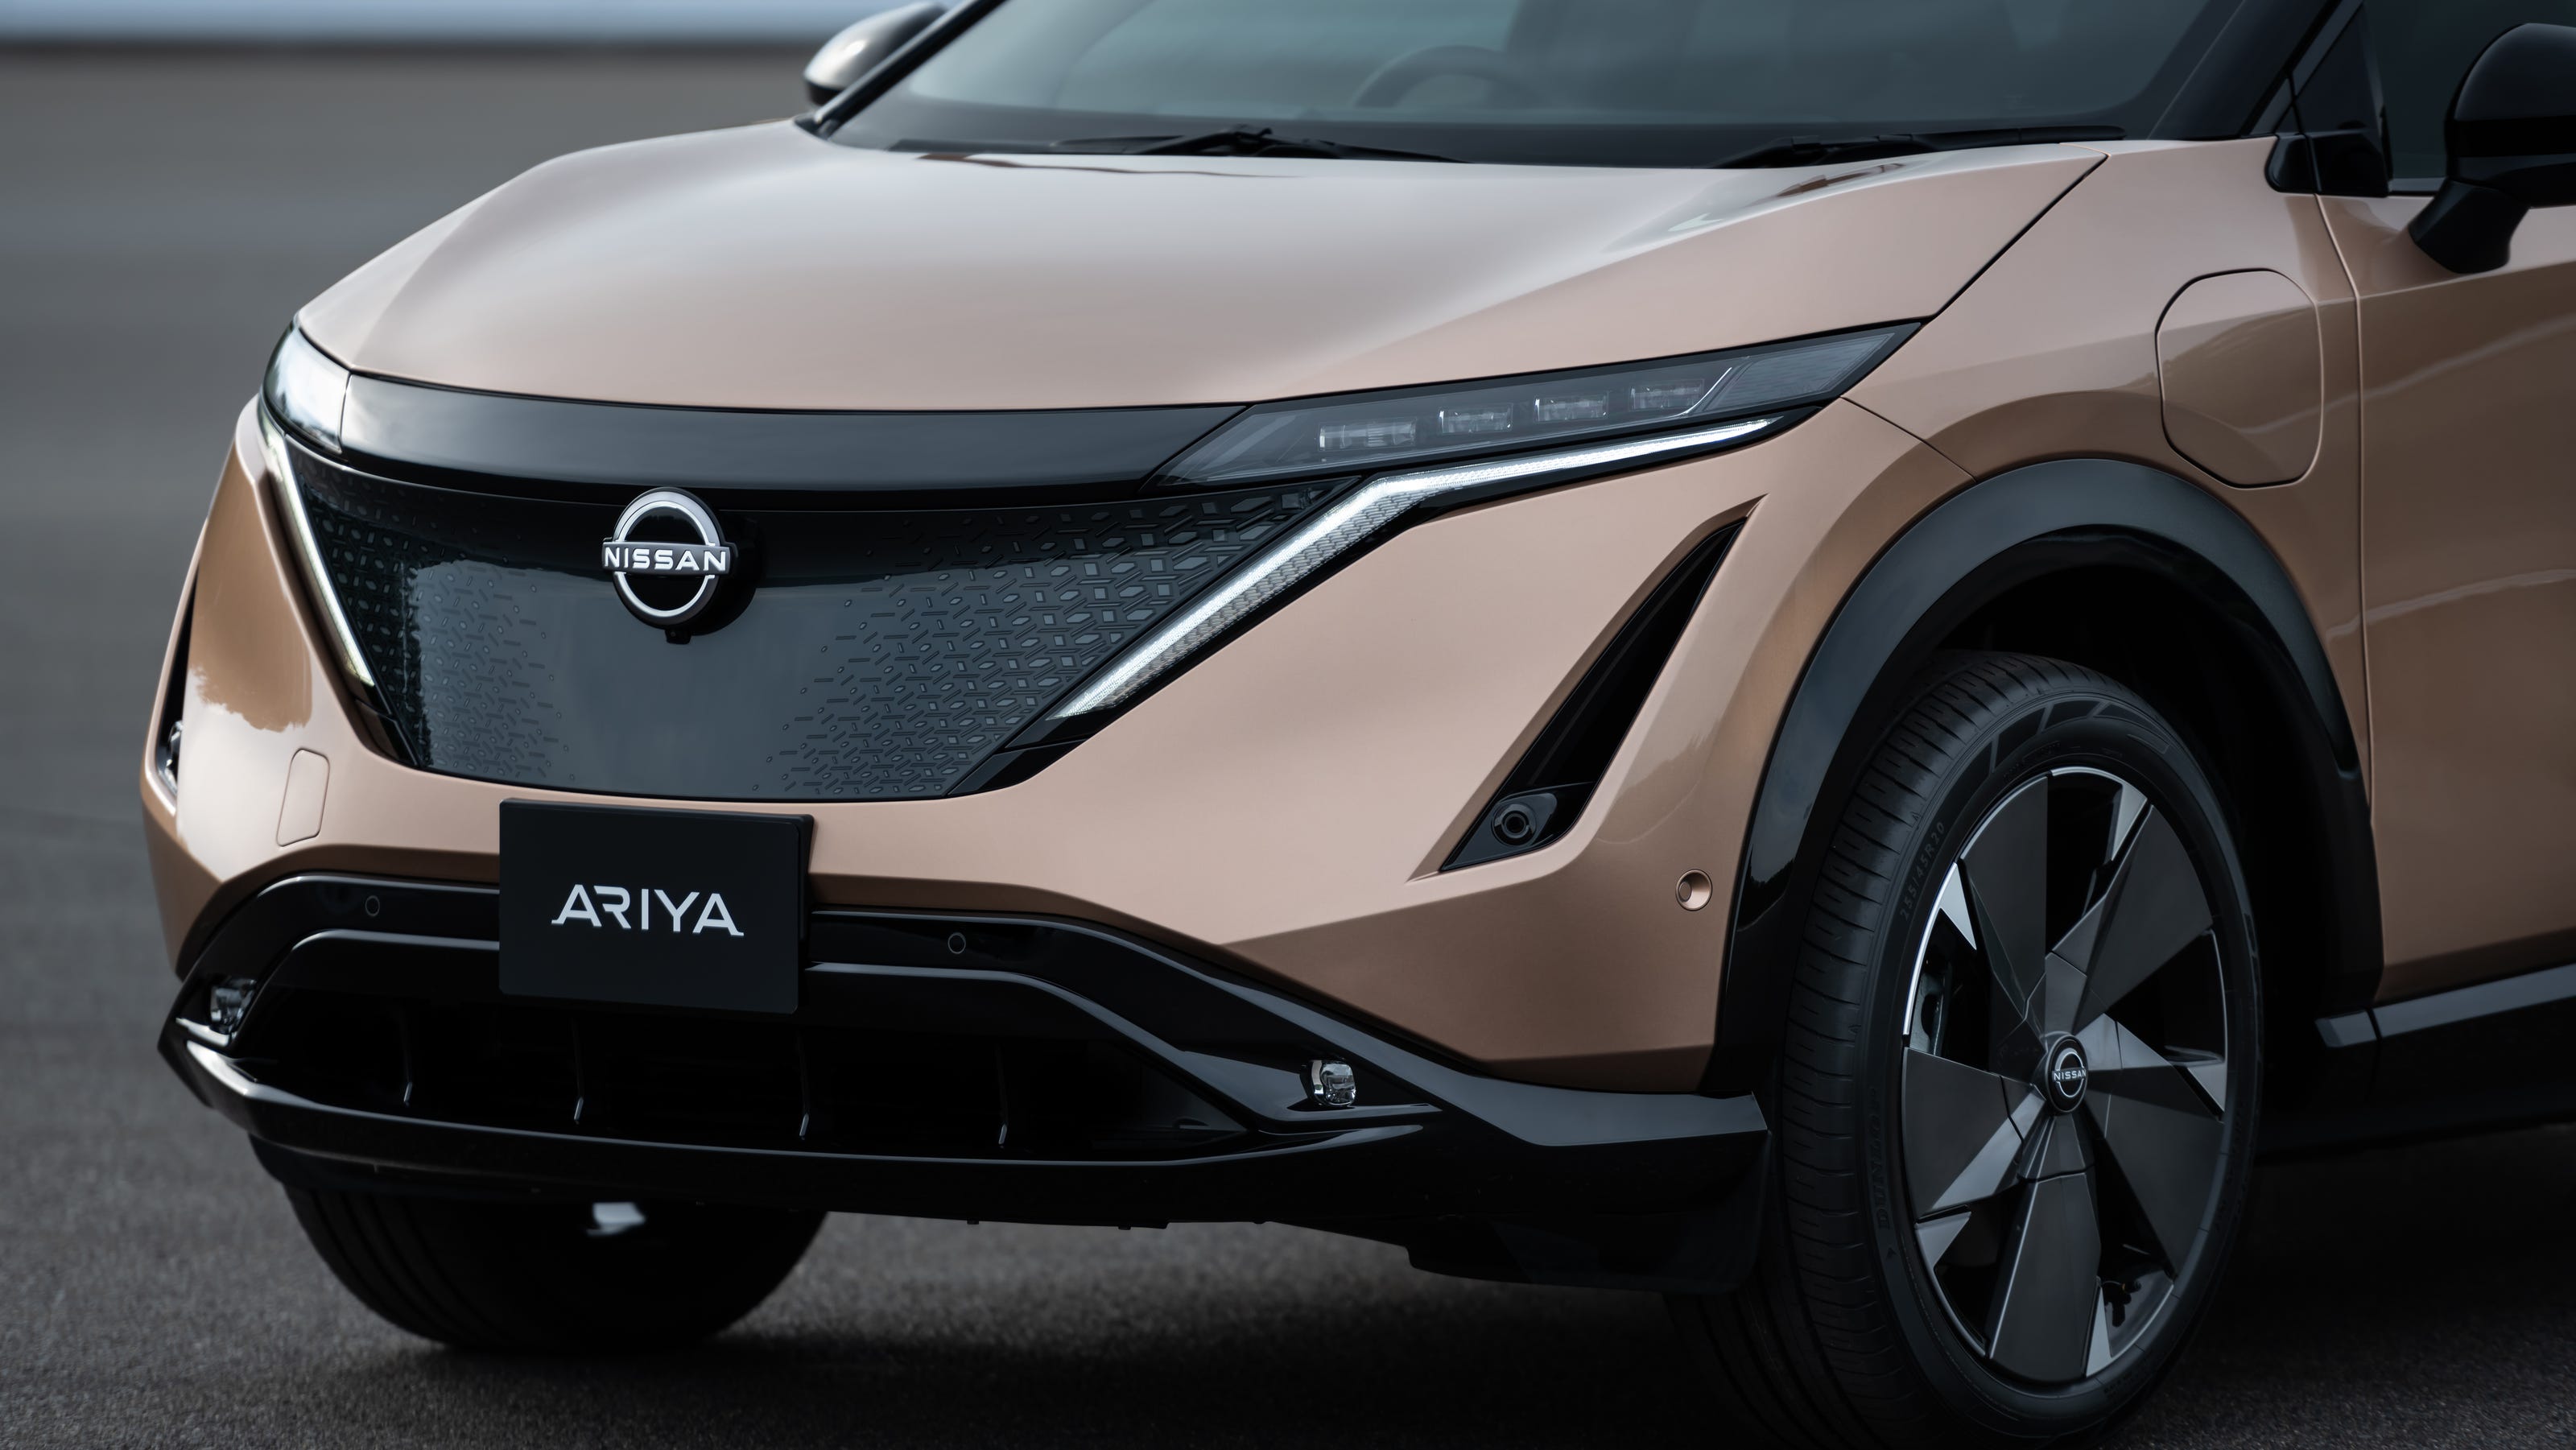 Nissan reveals $40,000 electric SUV: Nissan Ariya to arrive in 2021